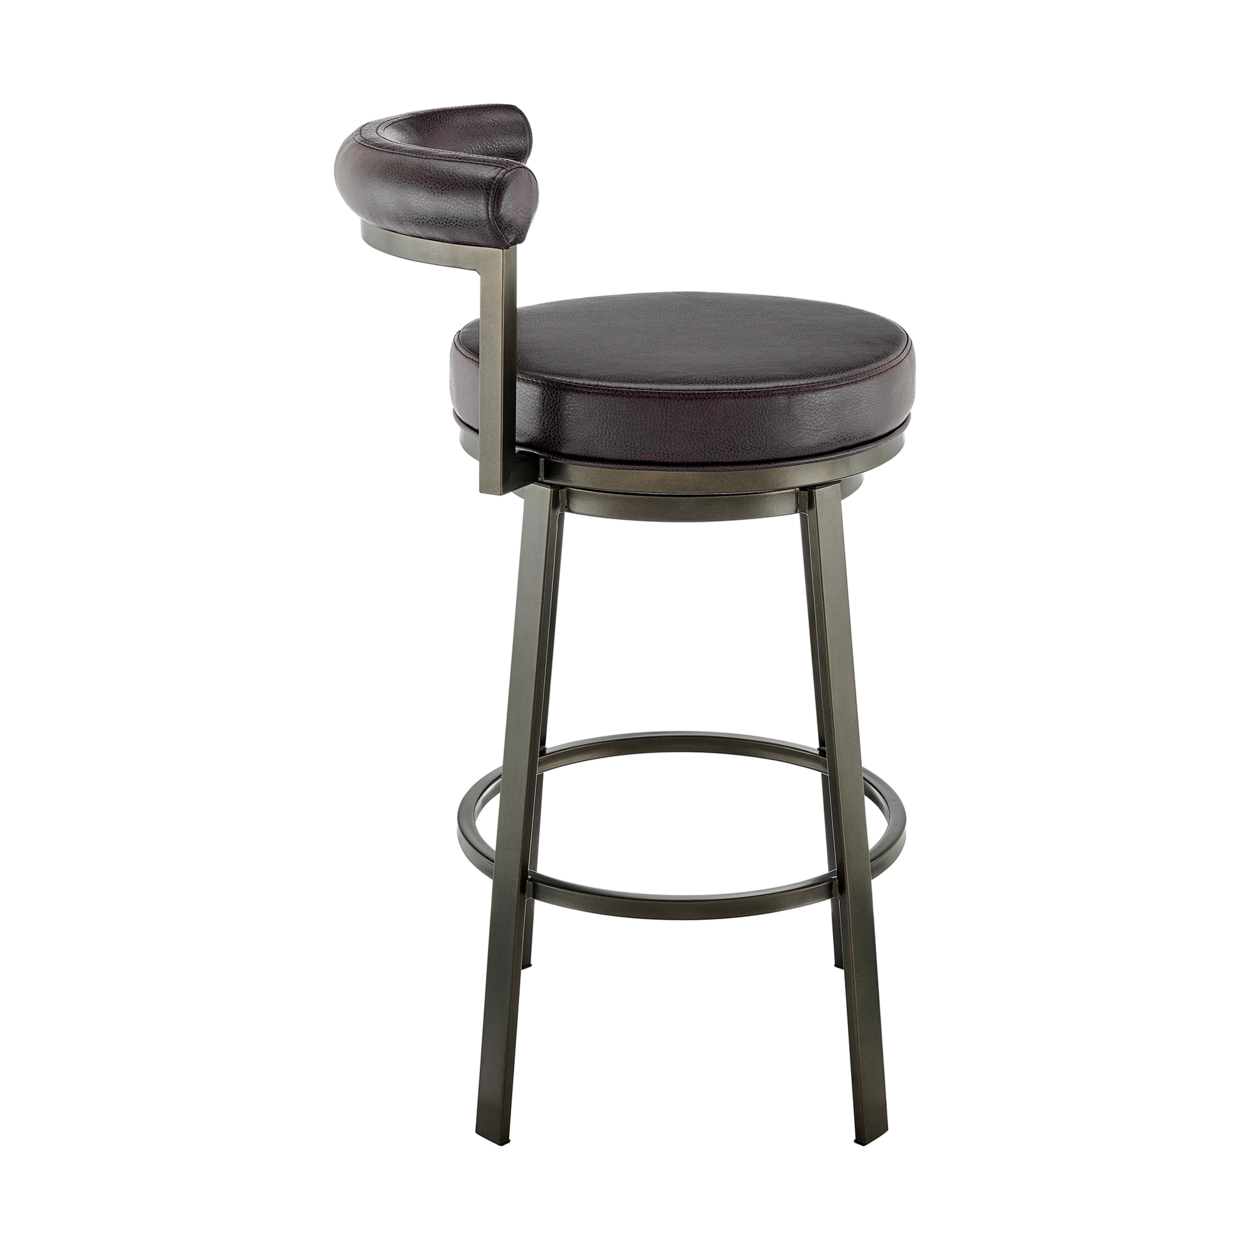 Elysha 26 Inch Swivel Counter Stool Chair, Round Brown Faux Leather Cushion- Saltoro Sherpi